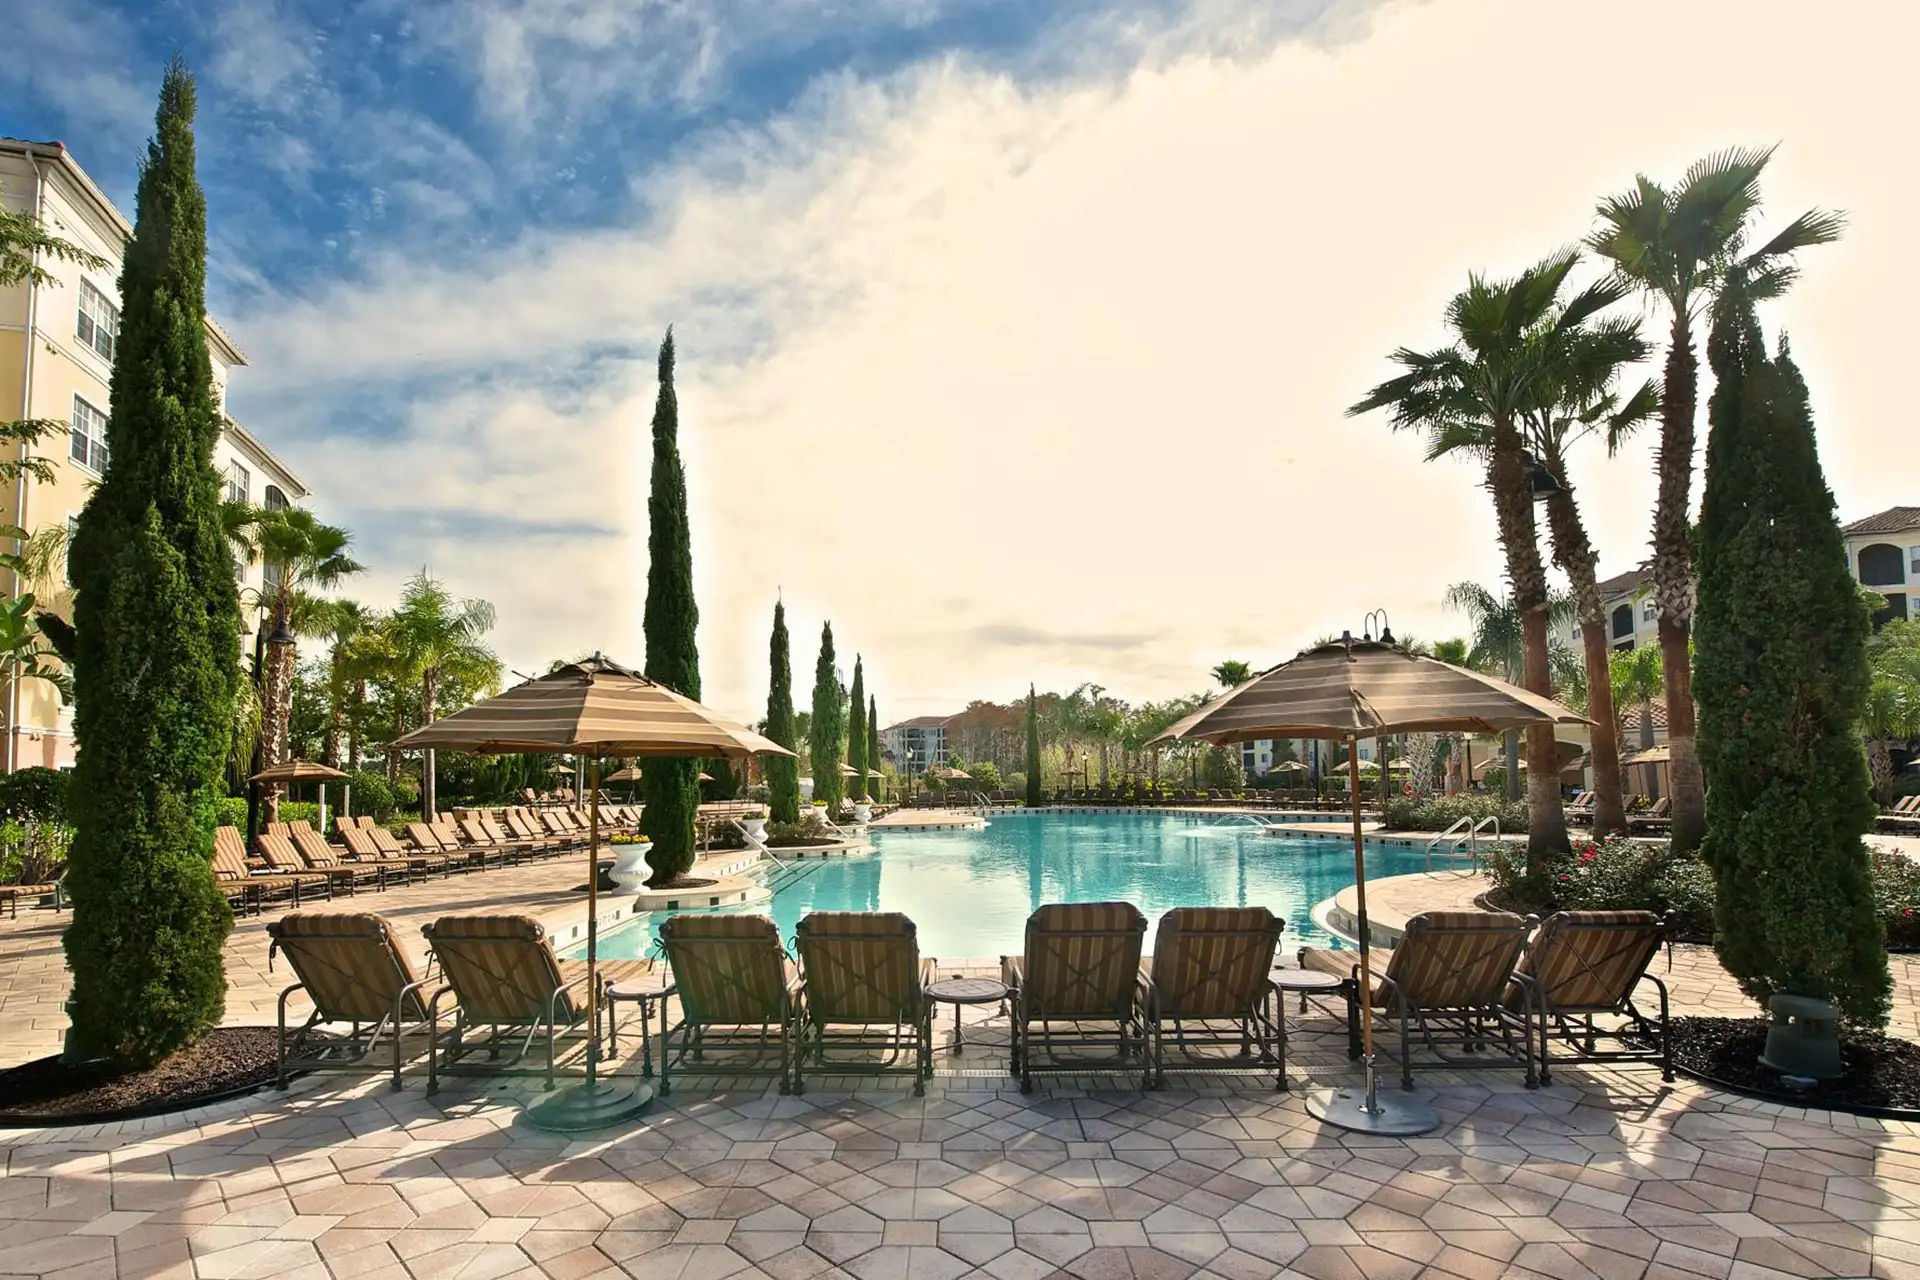 Pool at WorldQuest Orlando Resort